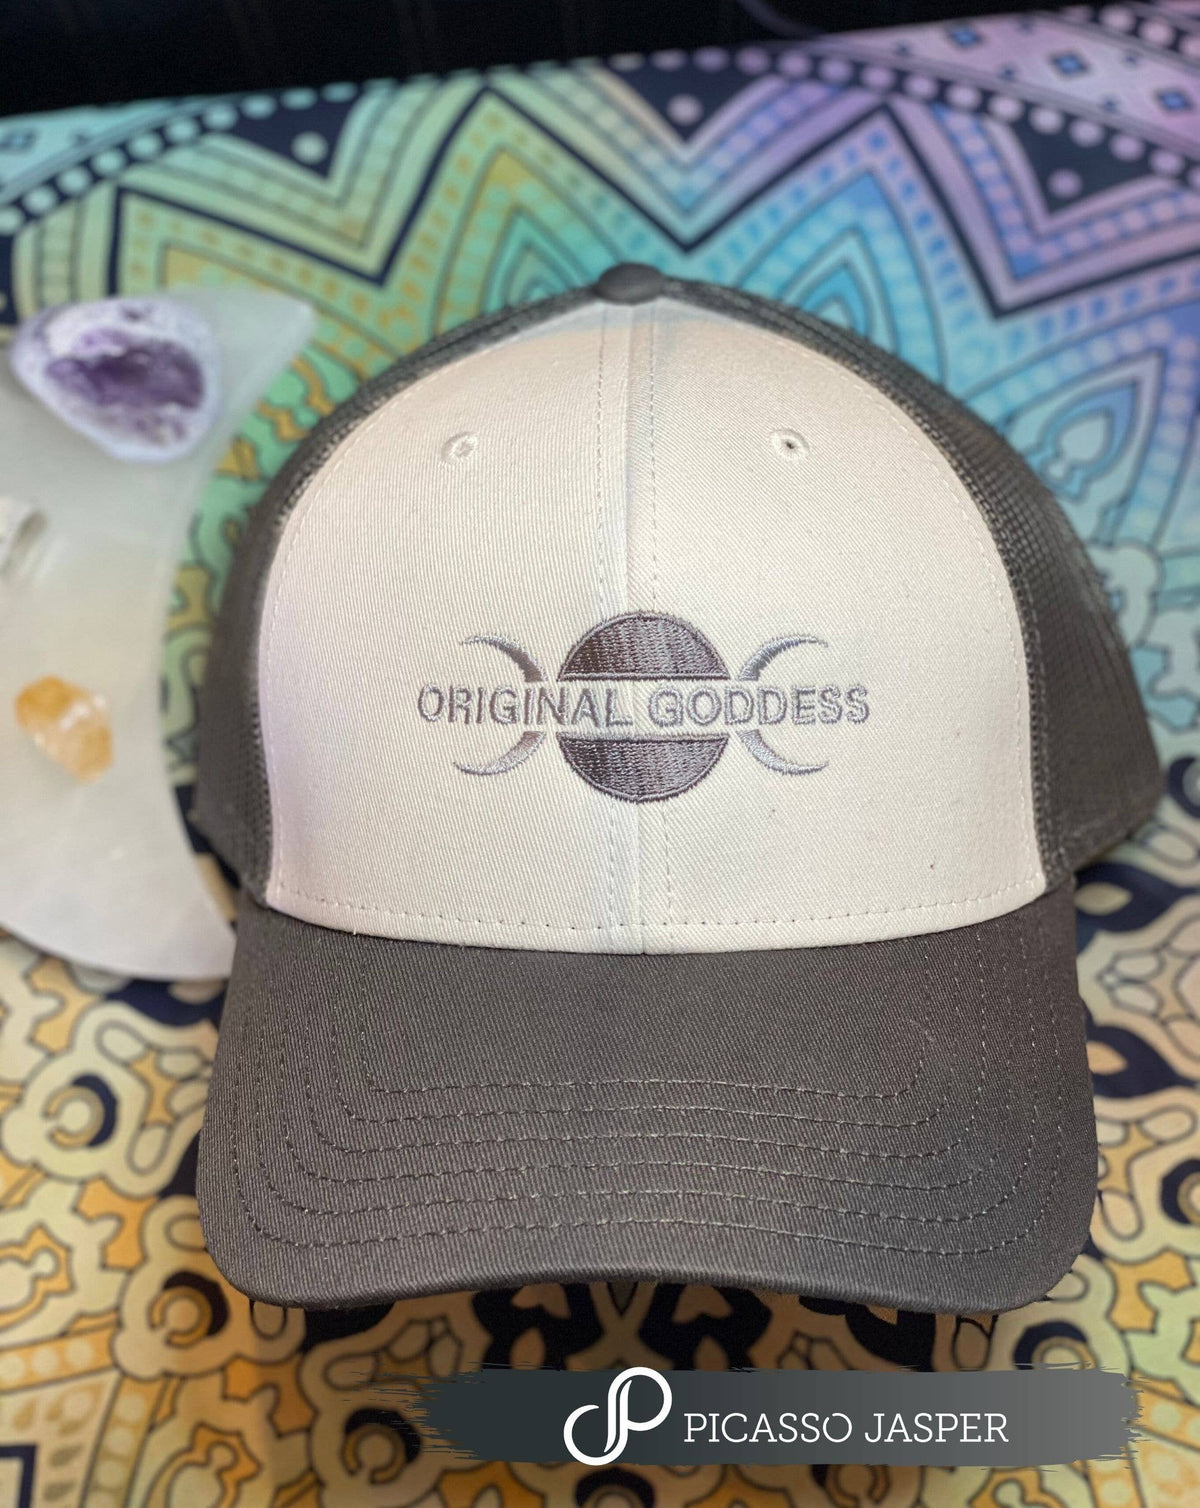 Terrapin Moon Apparel - Ladies Clothing Shop - Original Goddess Hat